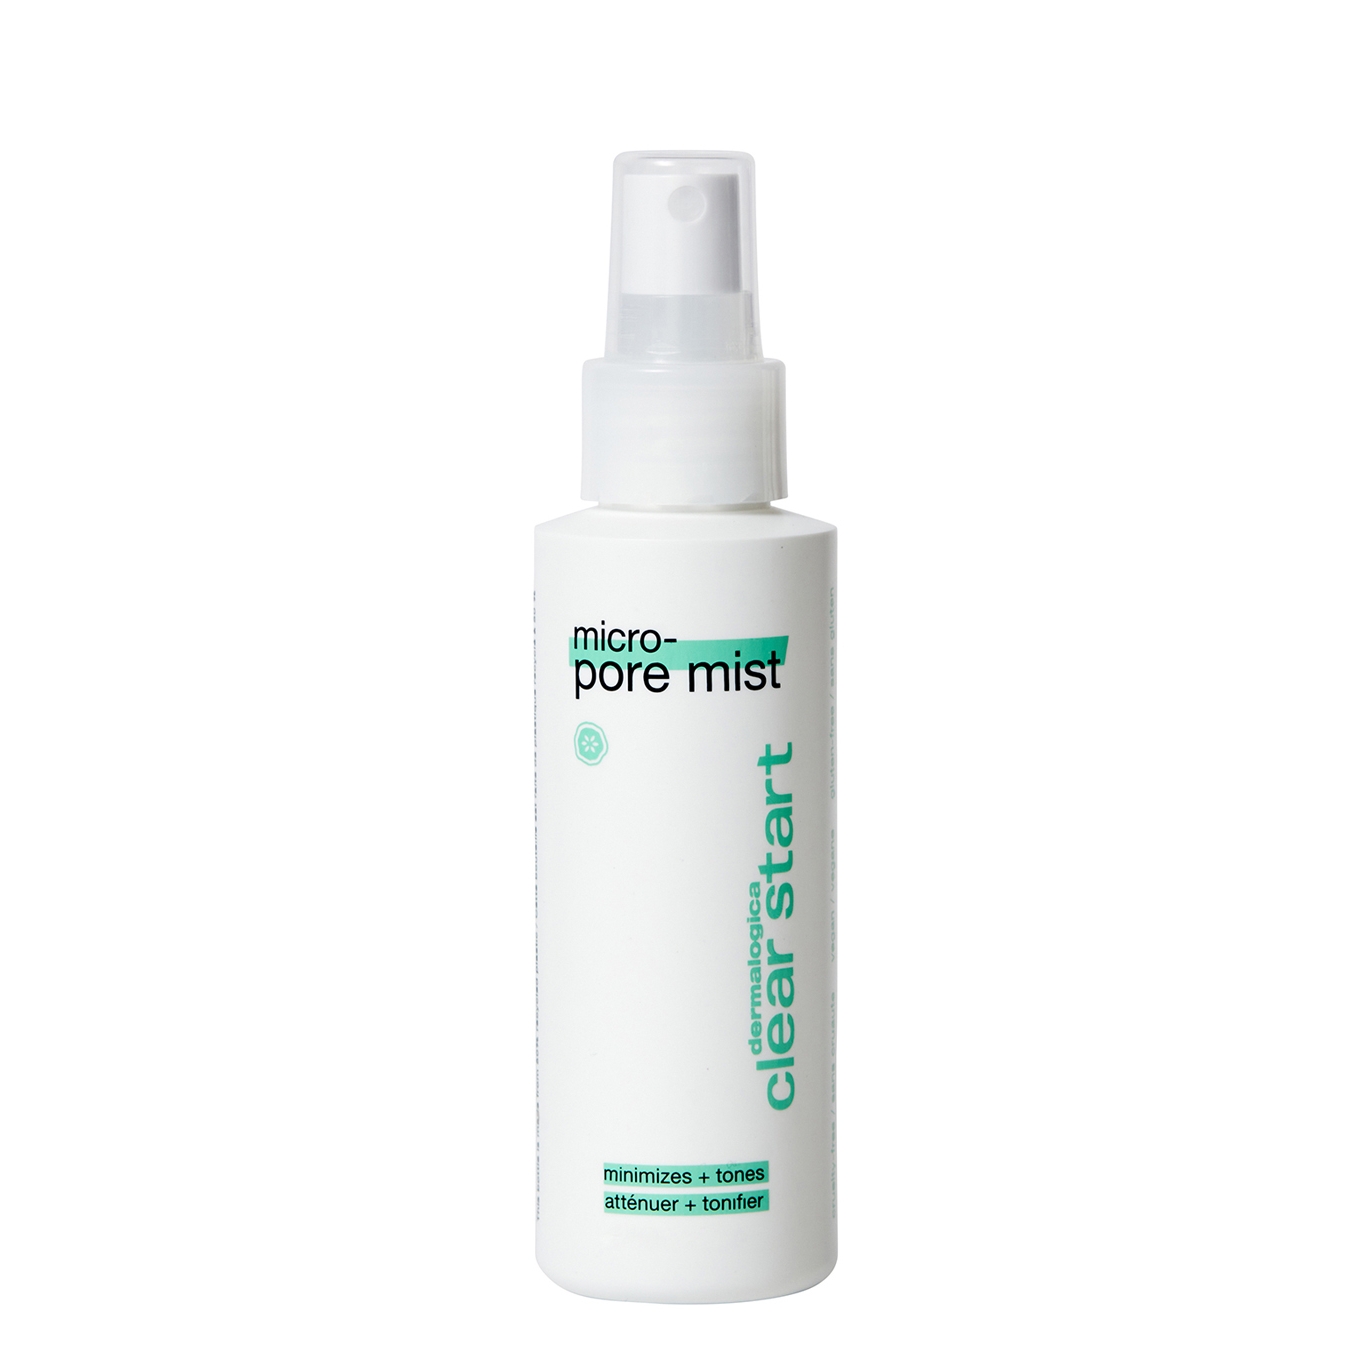 Micro Pore Mist 118ml, Face Makeup, Reduces Excess Oil